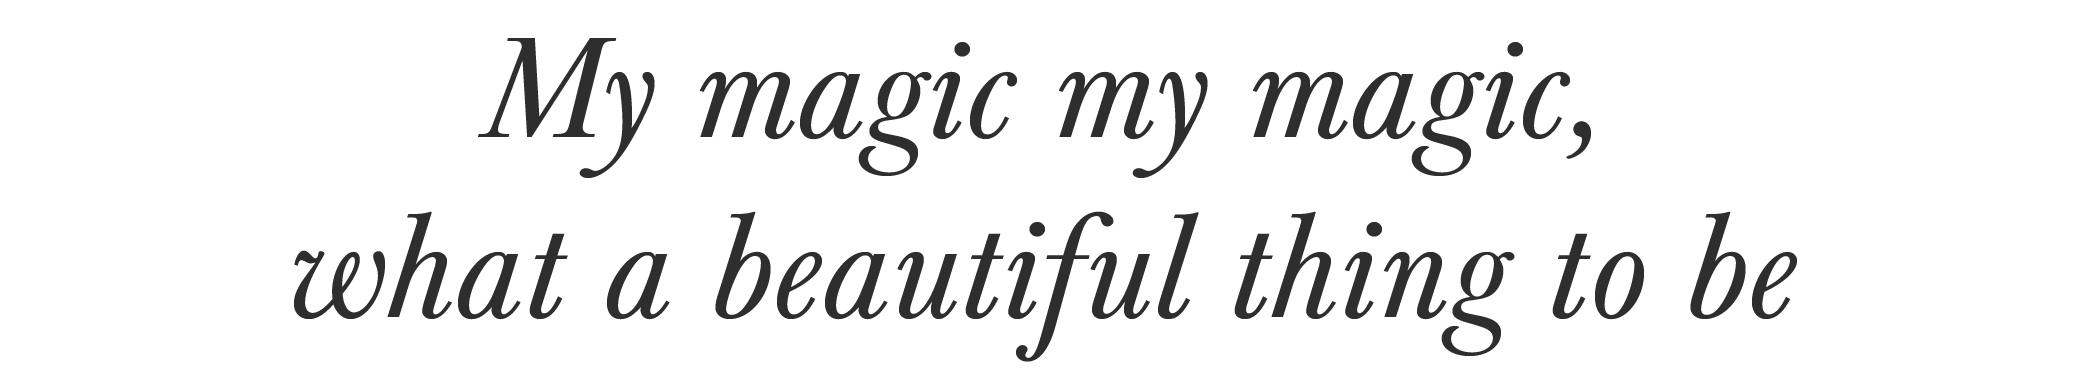 My Magic, My Magic: Poem by Tasha Marie — Catie Menke